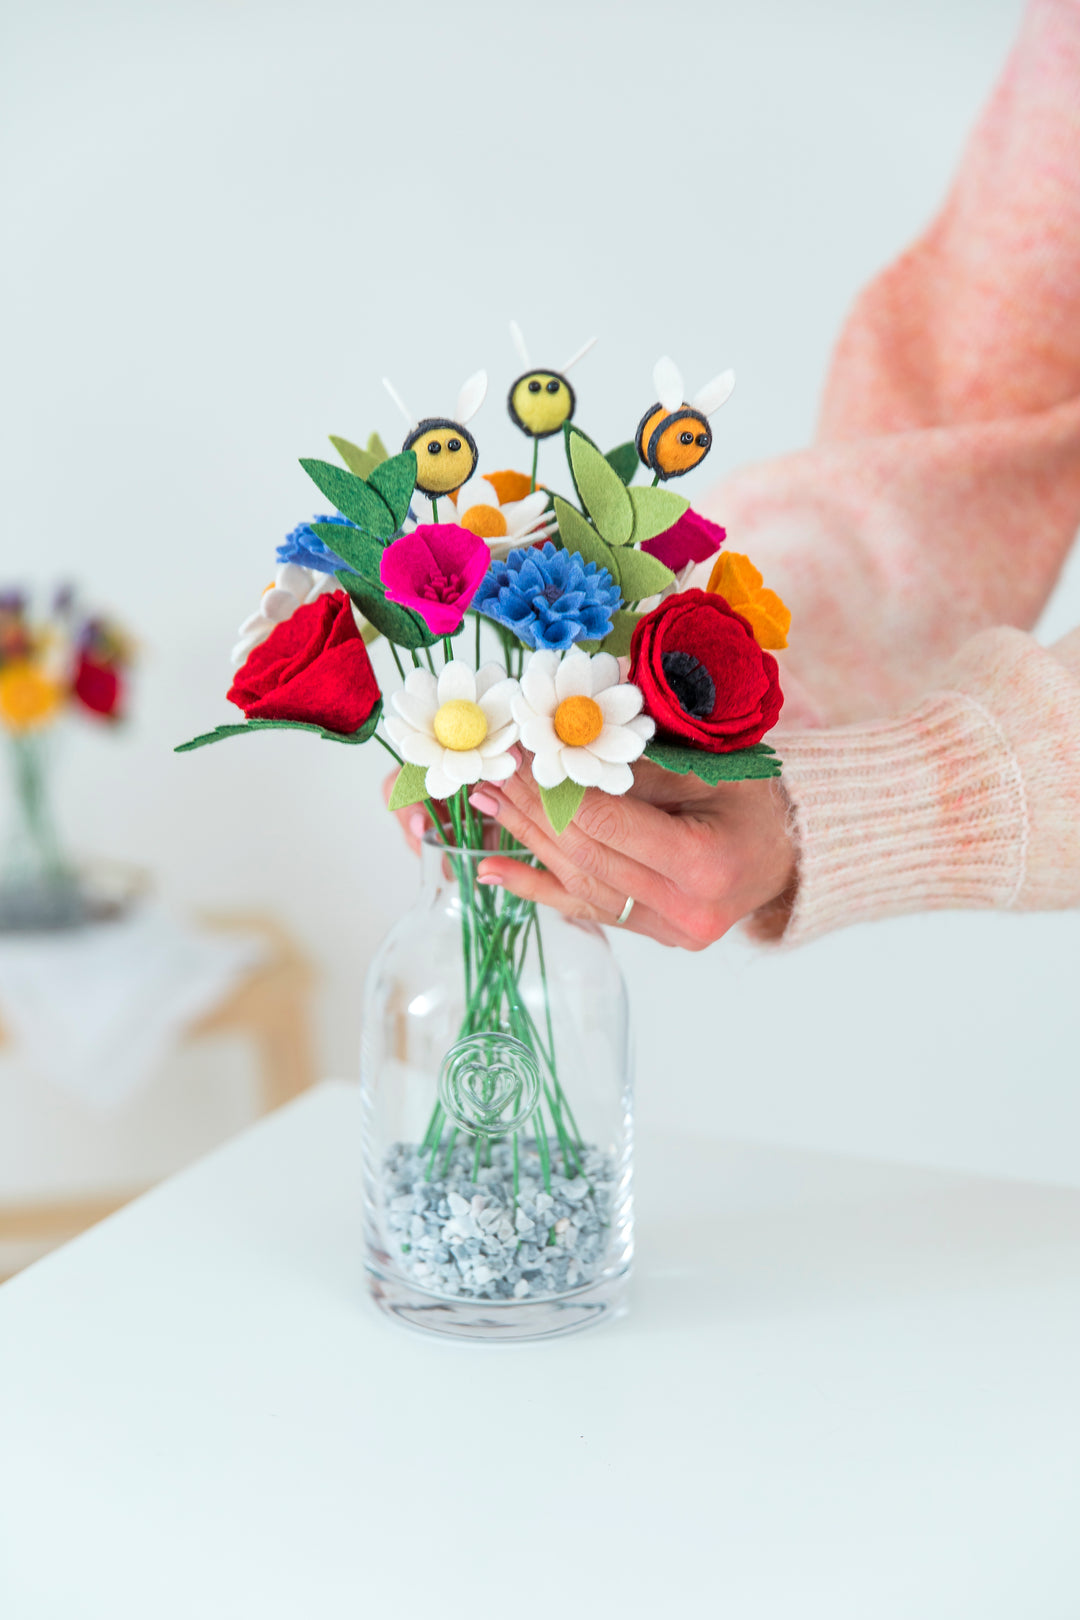 The Handmade Florist Felt Flower Craft Kits Winter Gift Guide 2022